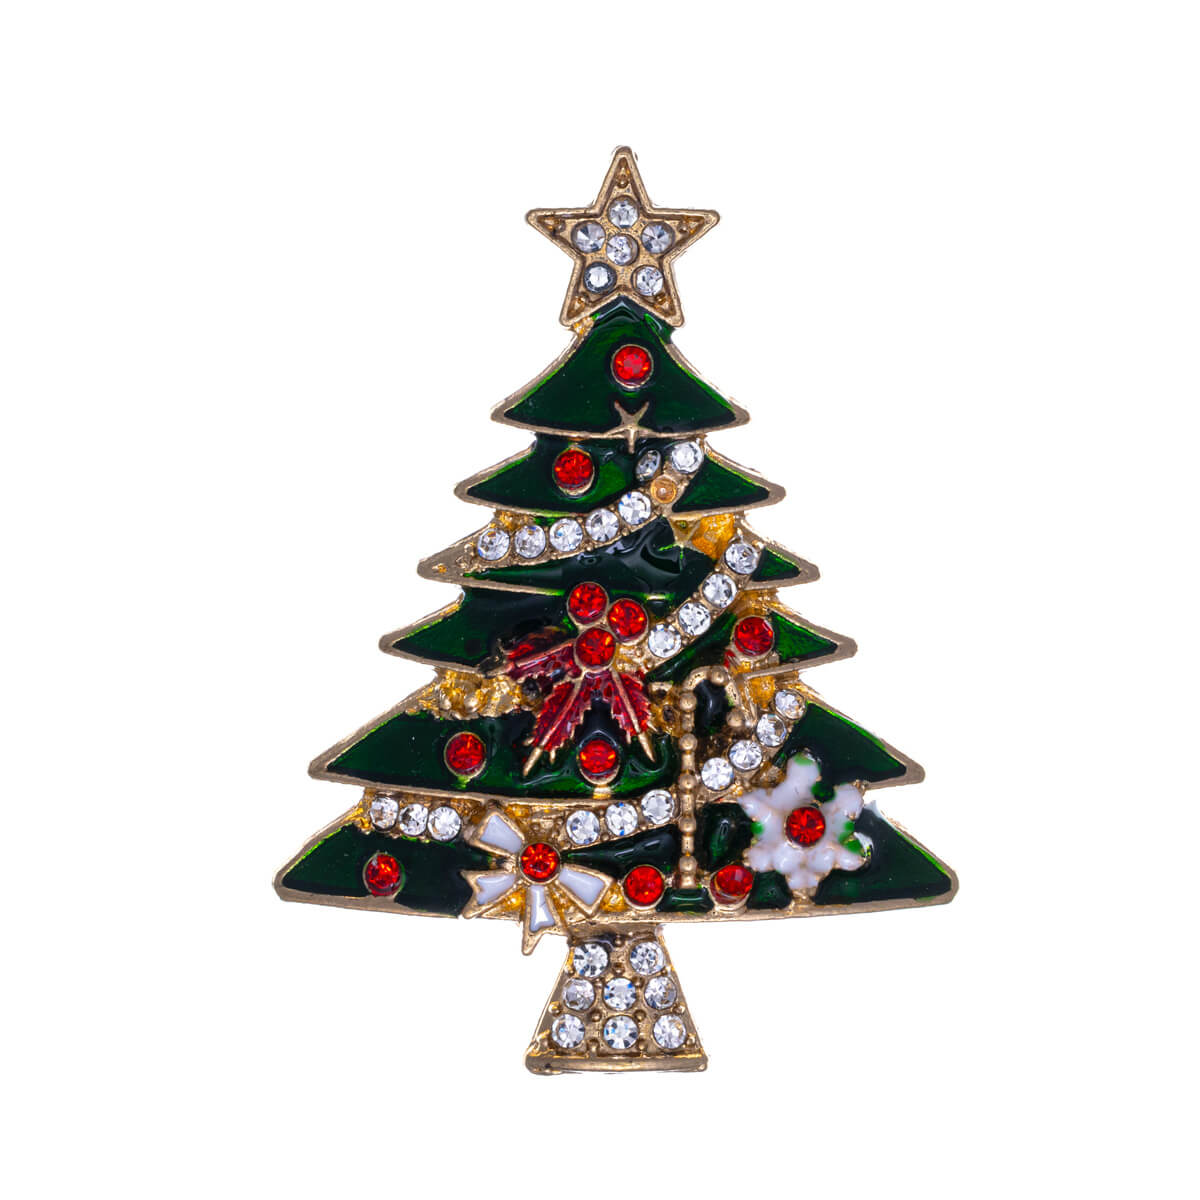 Christmas tree brooch with Christmas ornament star